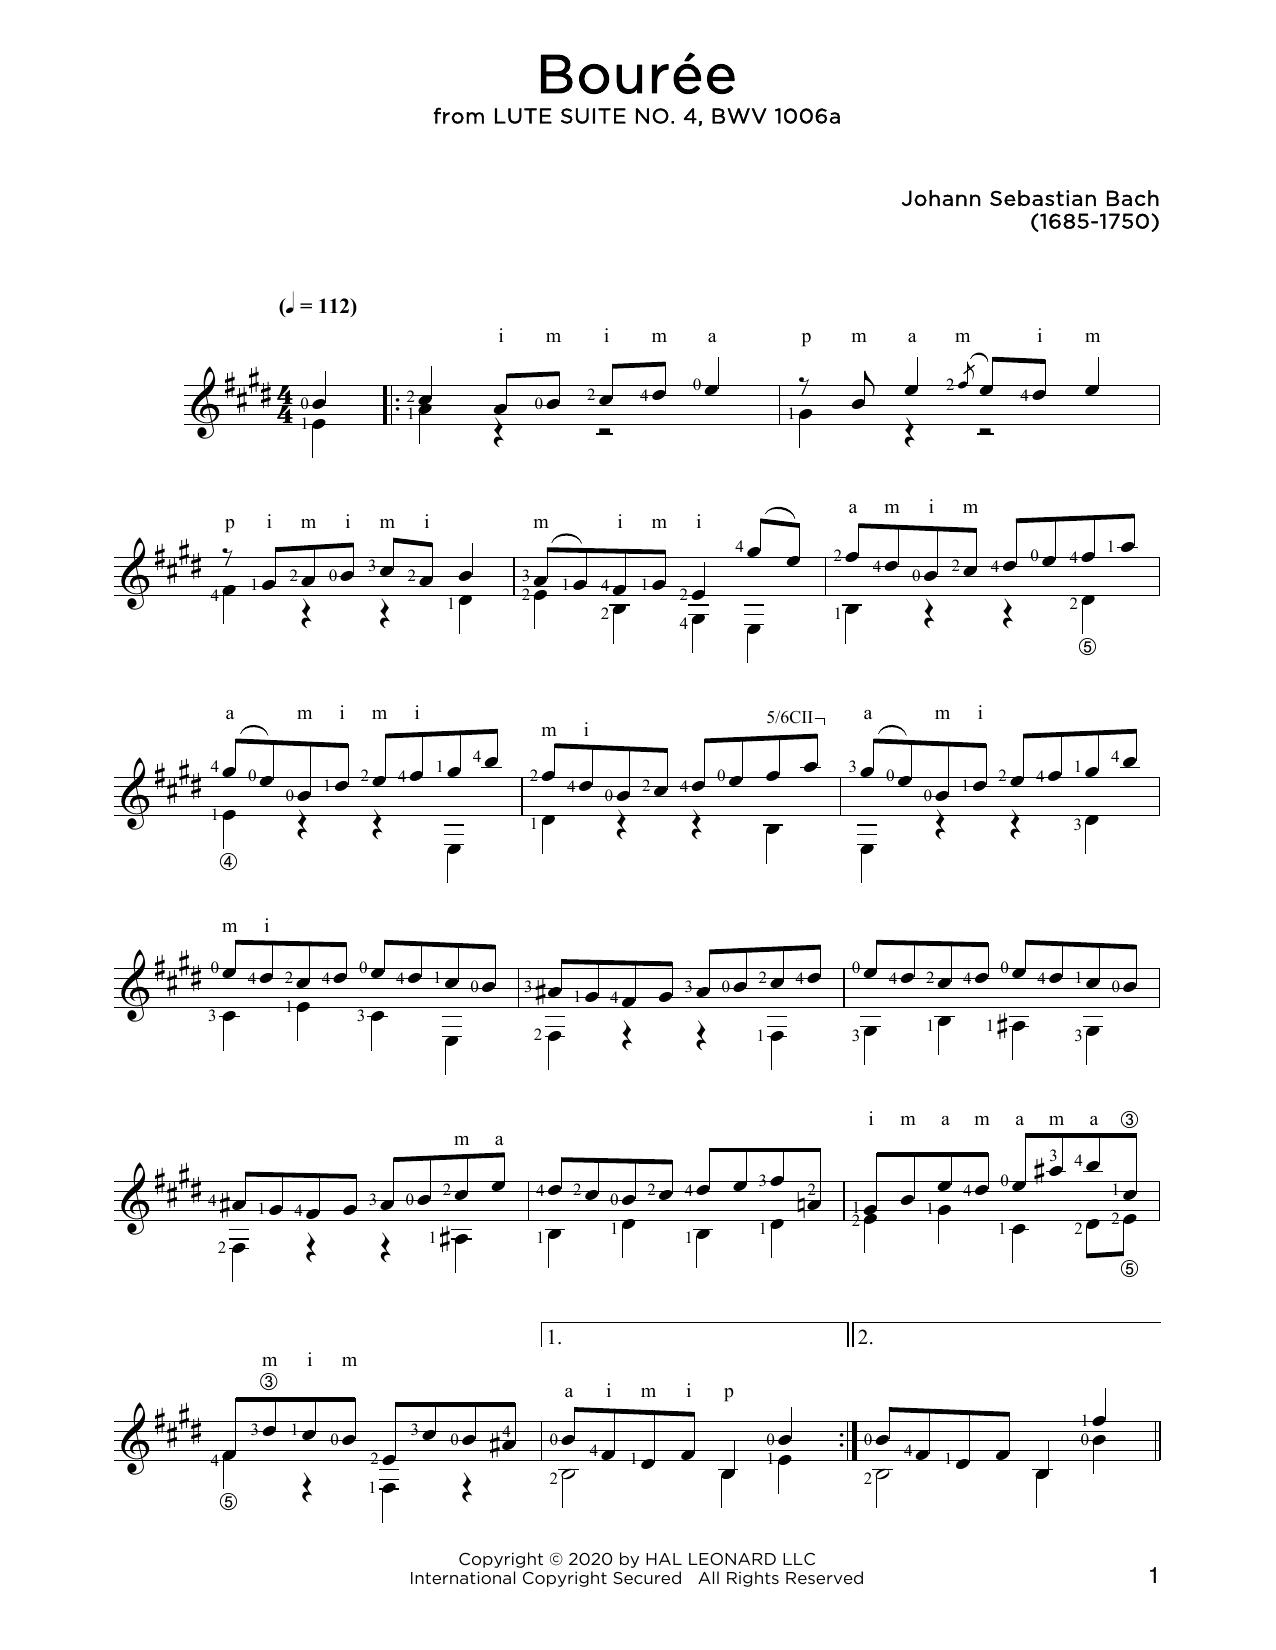 Johann Sebastian Bach Bouree Sheet Music Notes & Chords for Solo Guitar - Download or Print PDF